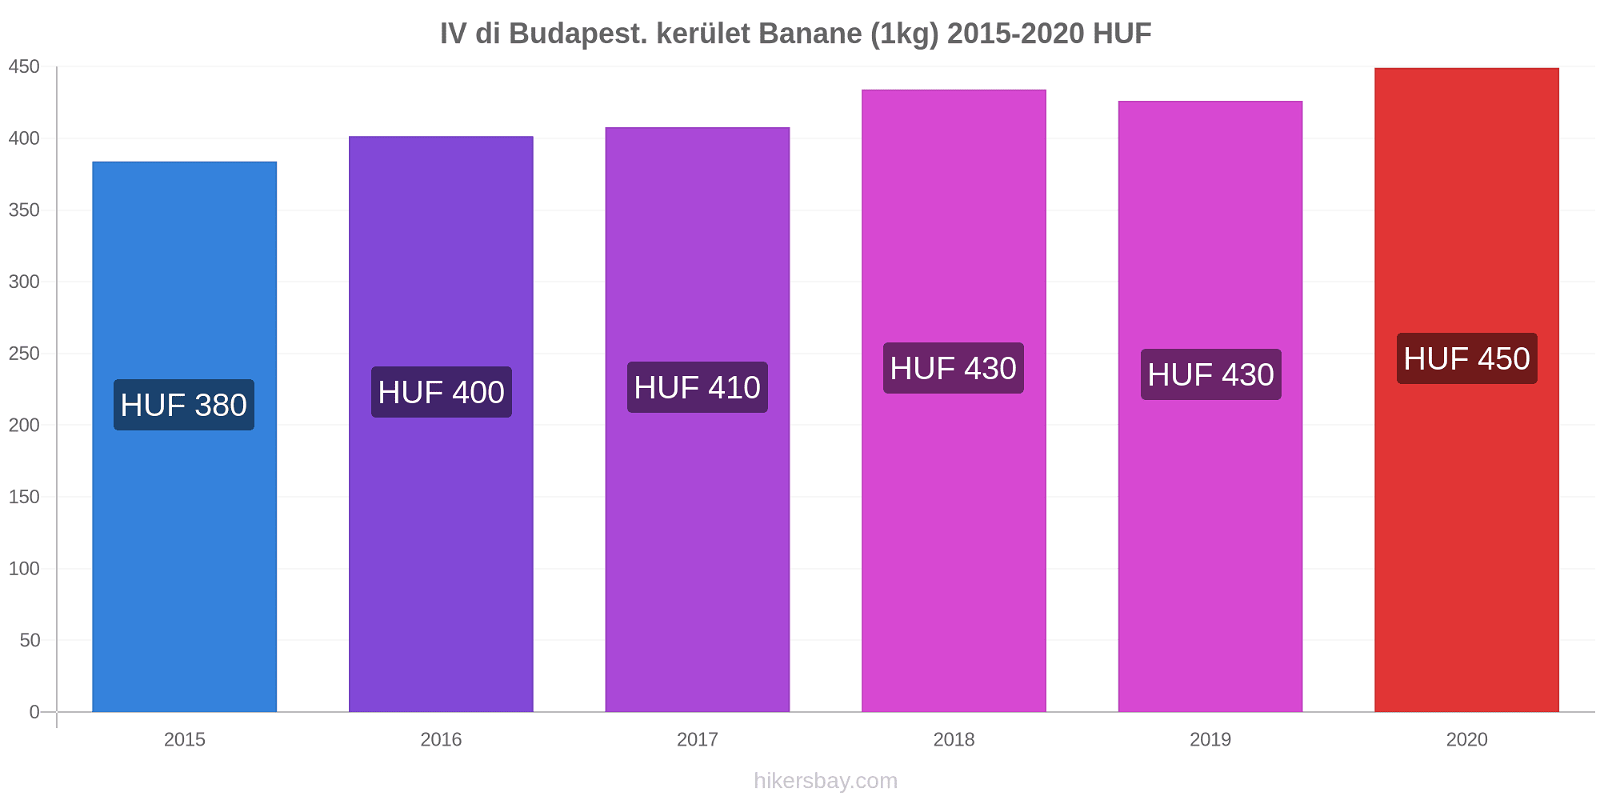 IV di Budapest. kerület variazioni di prezzo Banana (1kg) hikersbay.com